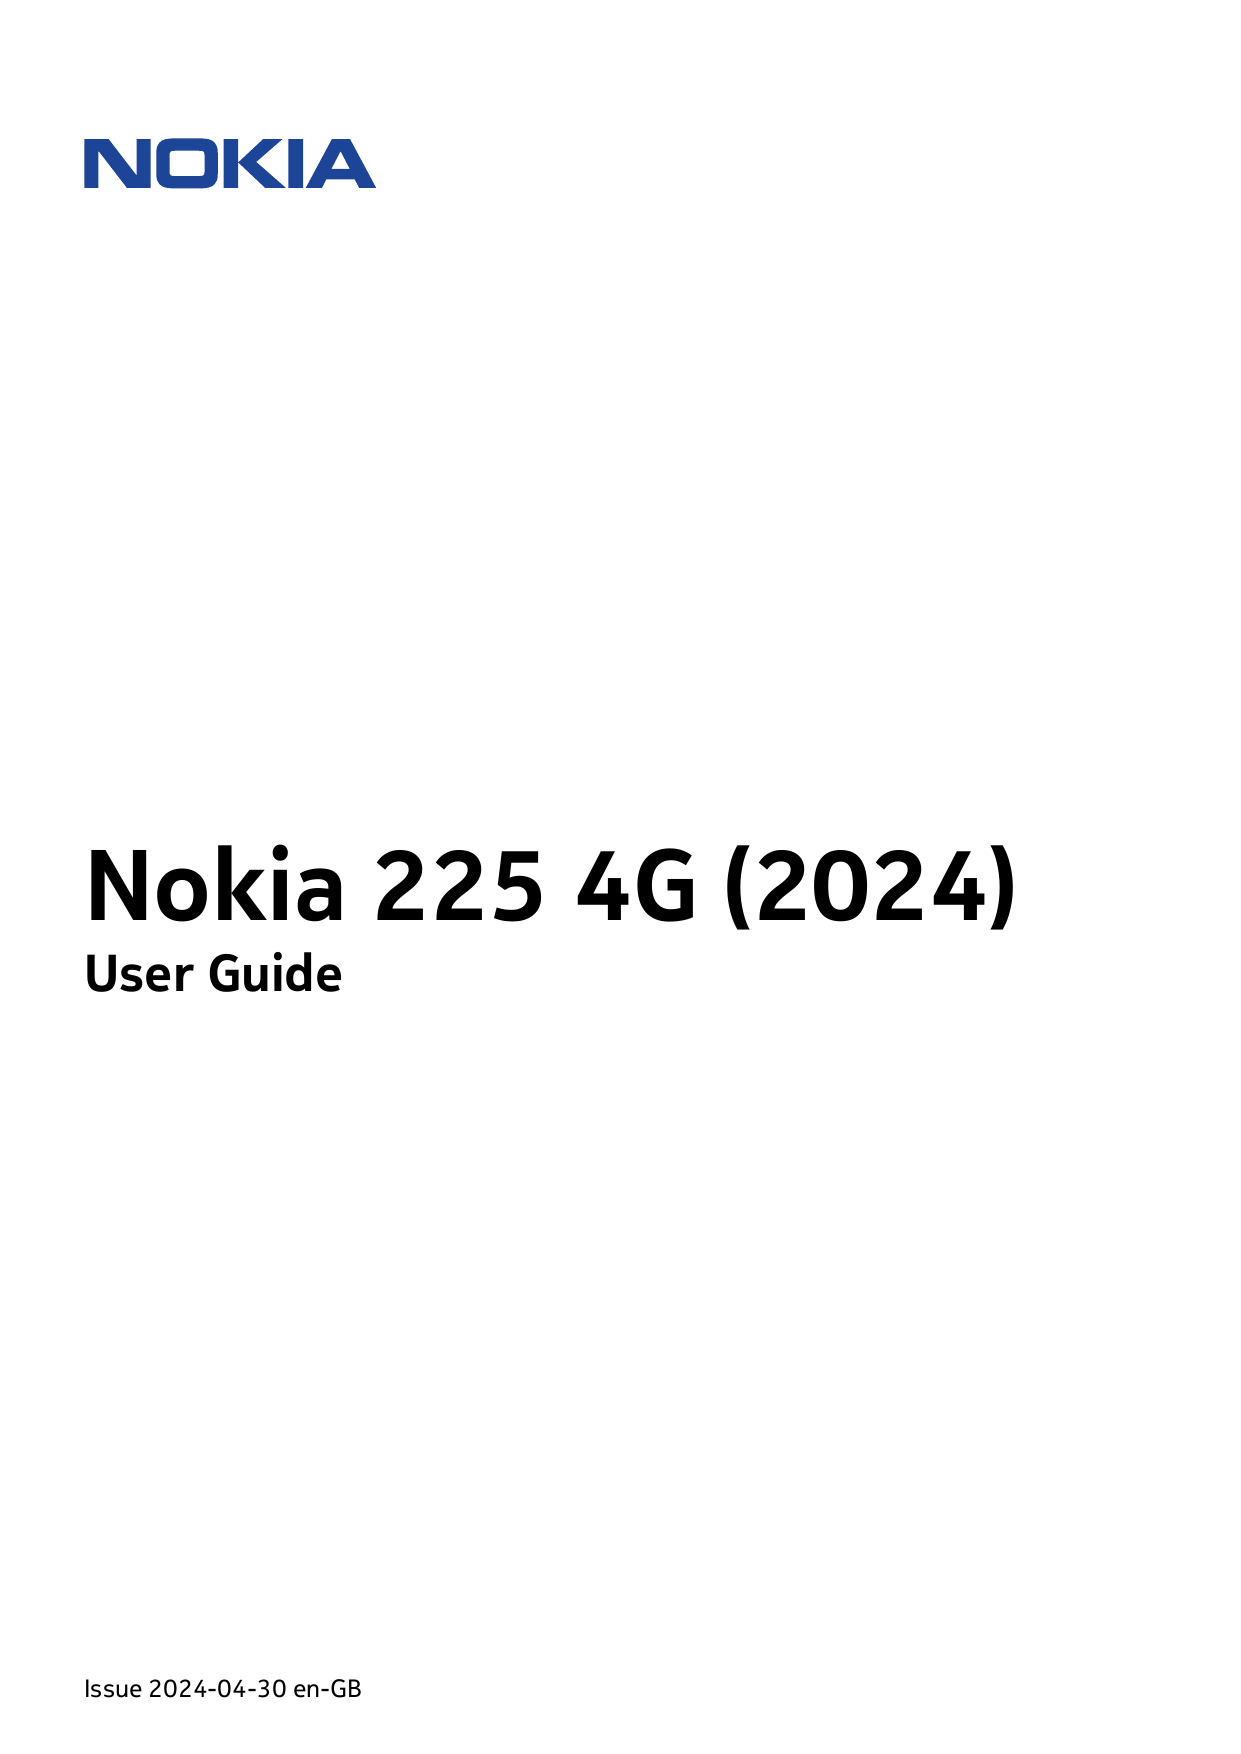 Nokia 225 4G (2024)User GuideIssue 2024-04-30 en-GB